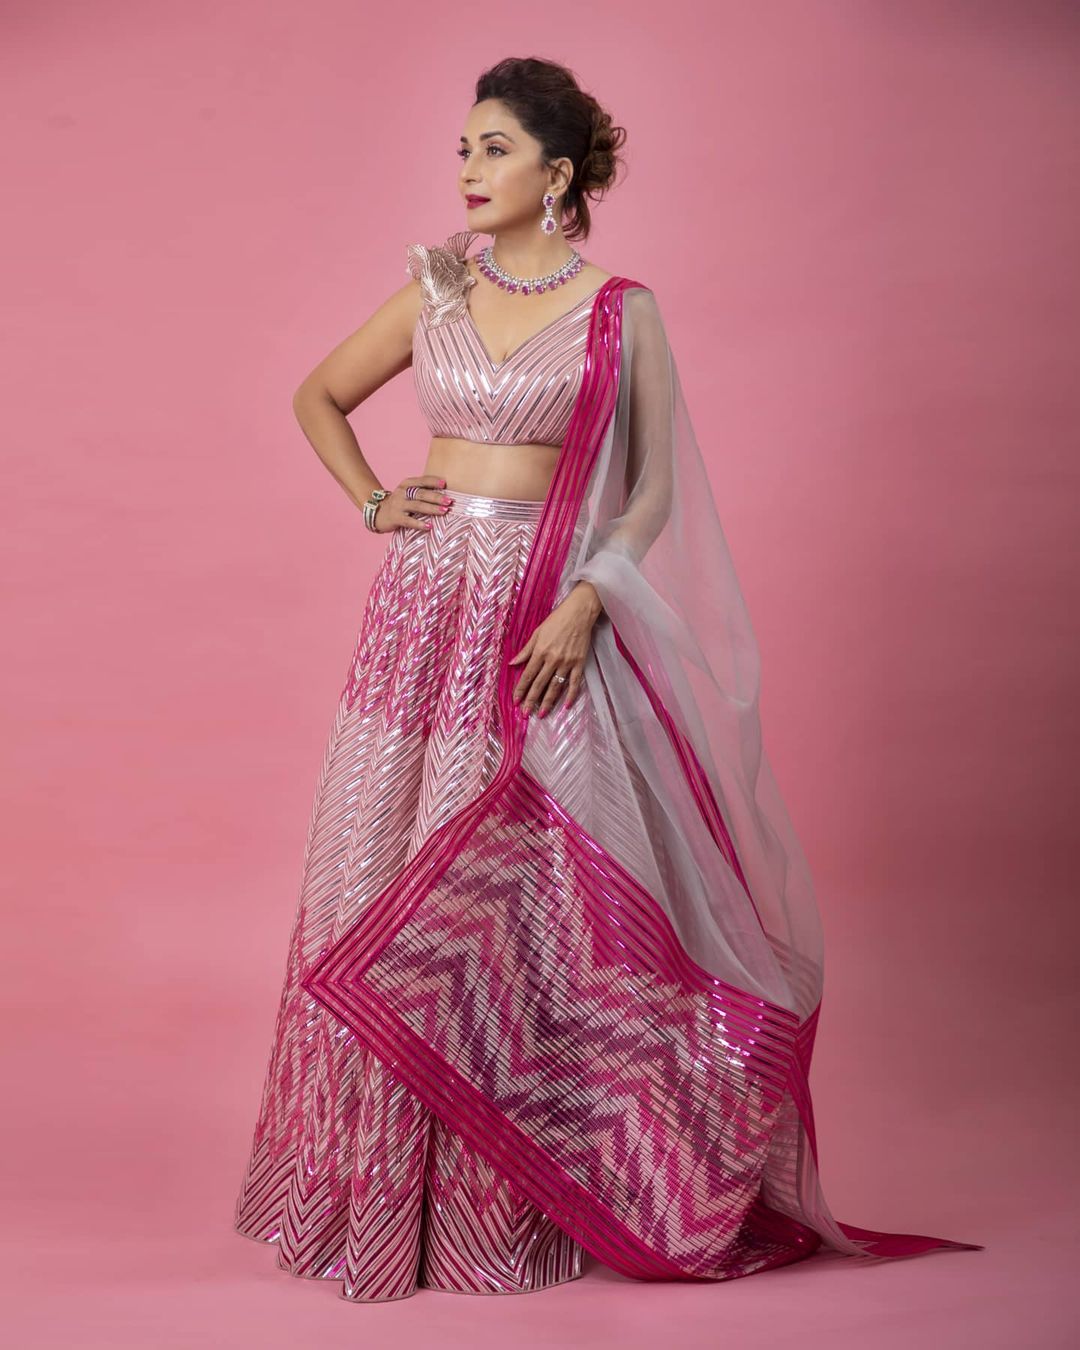  Madhuri Dixit Nene looks stylish in the pink and silver lehenga. (Image: Instagram)